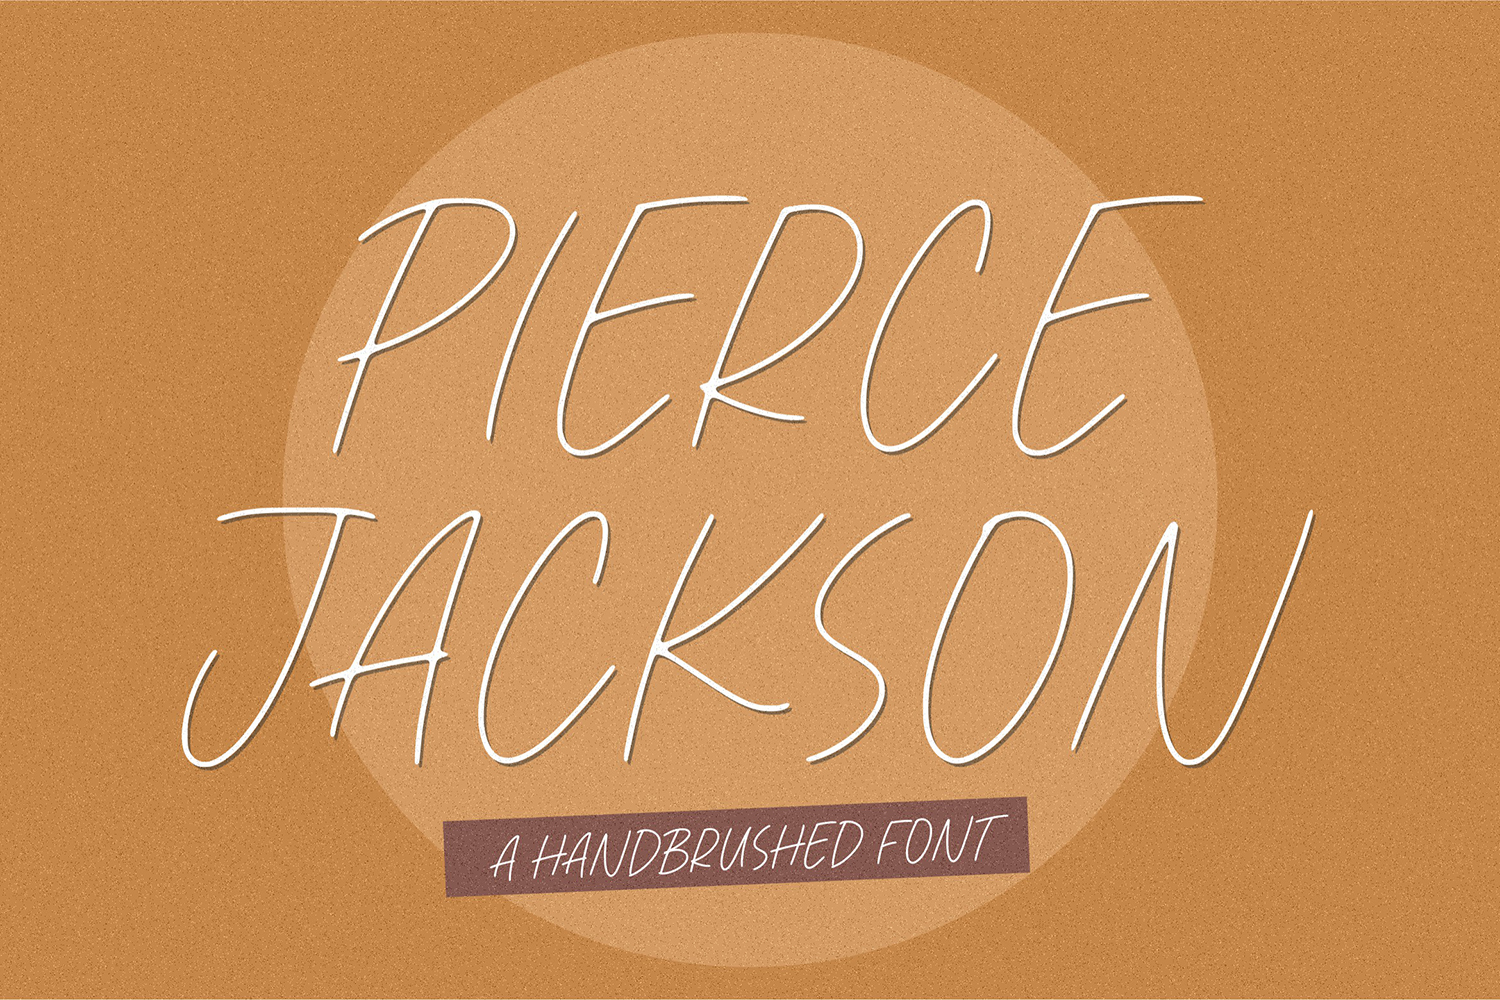 Pierce Jackson Free Font